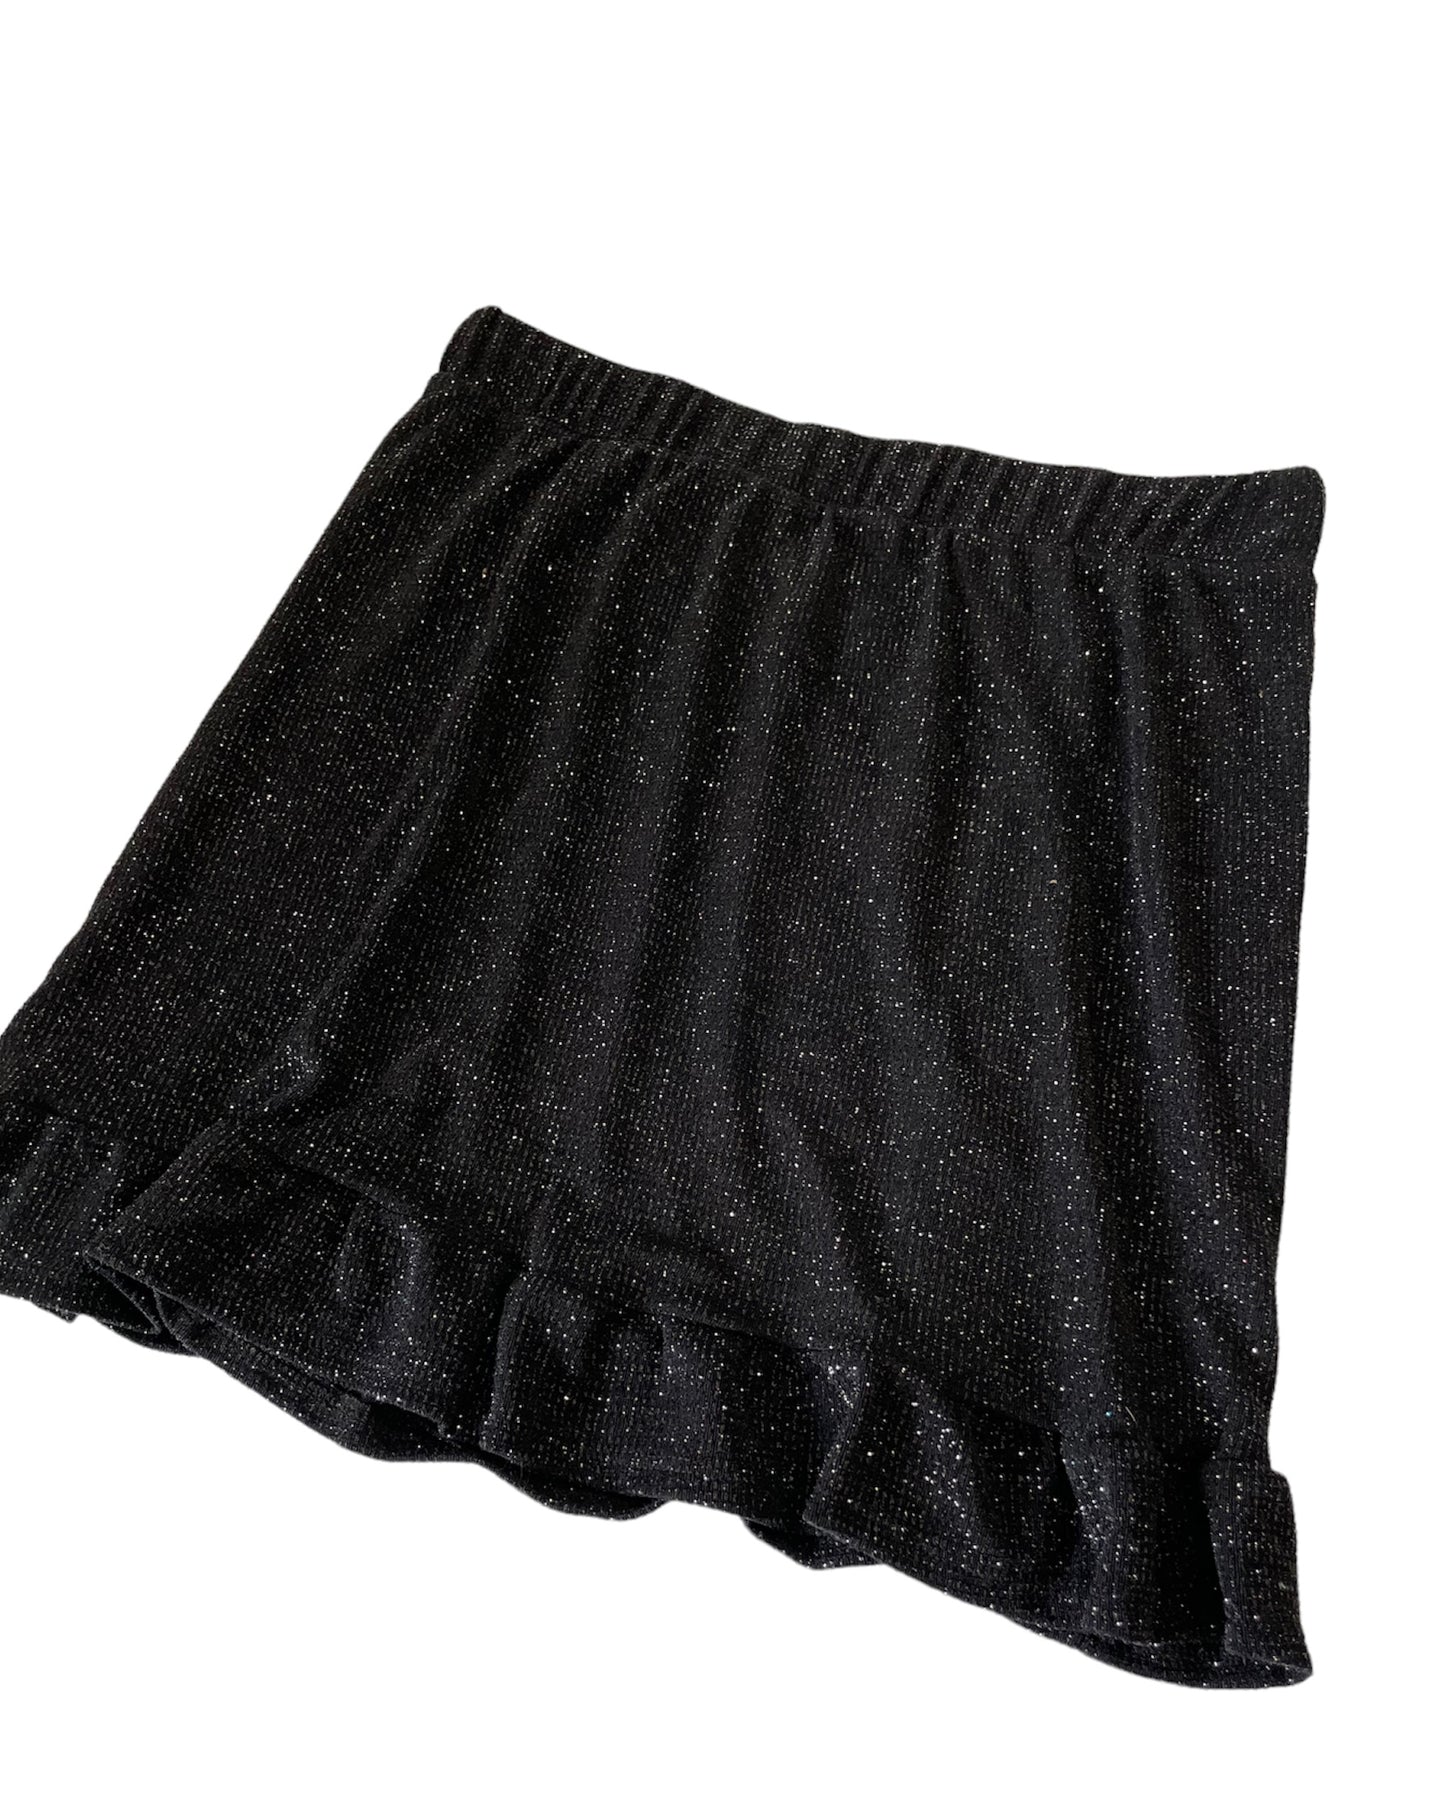 Ruffle Glittery Black Skirt